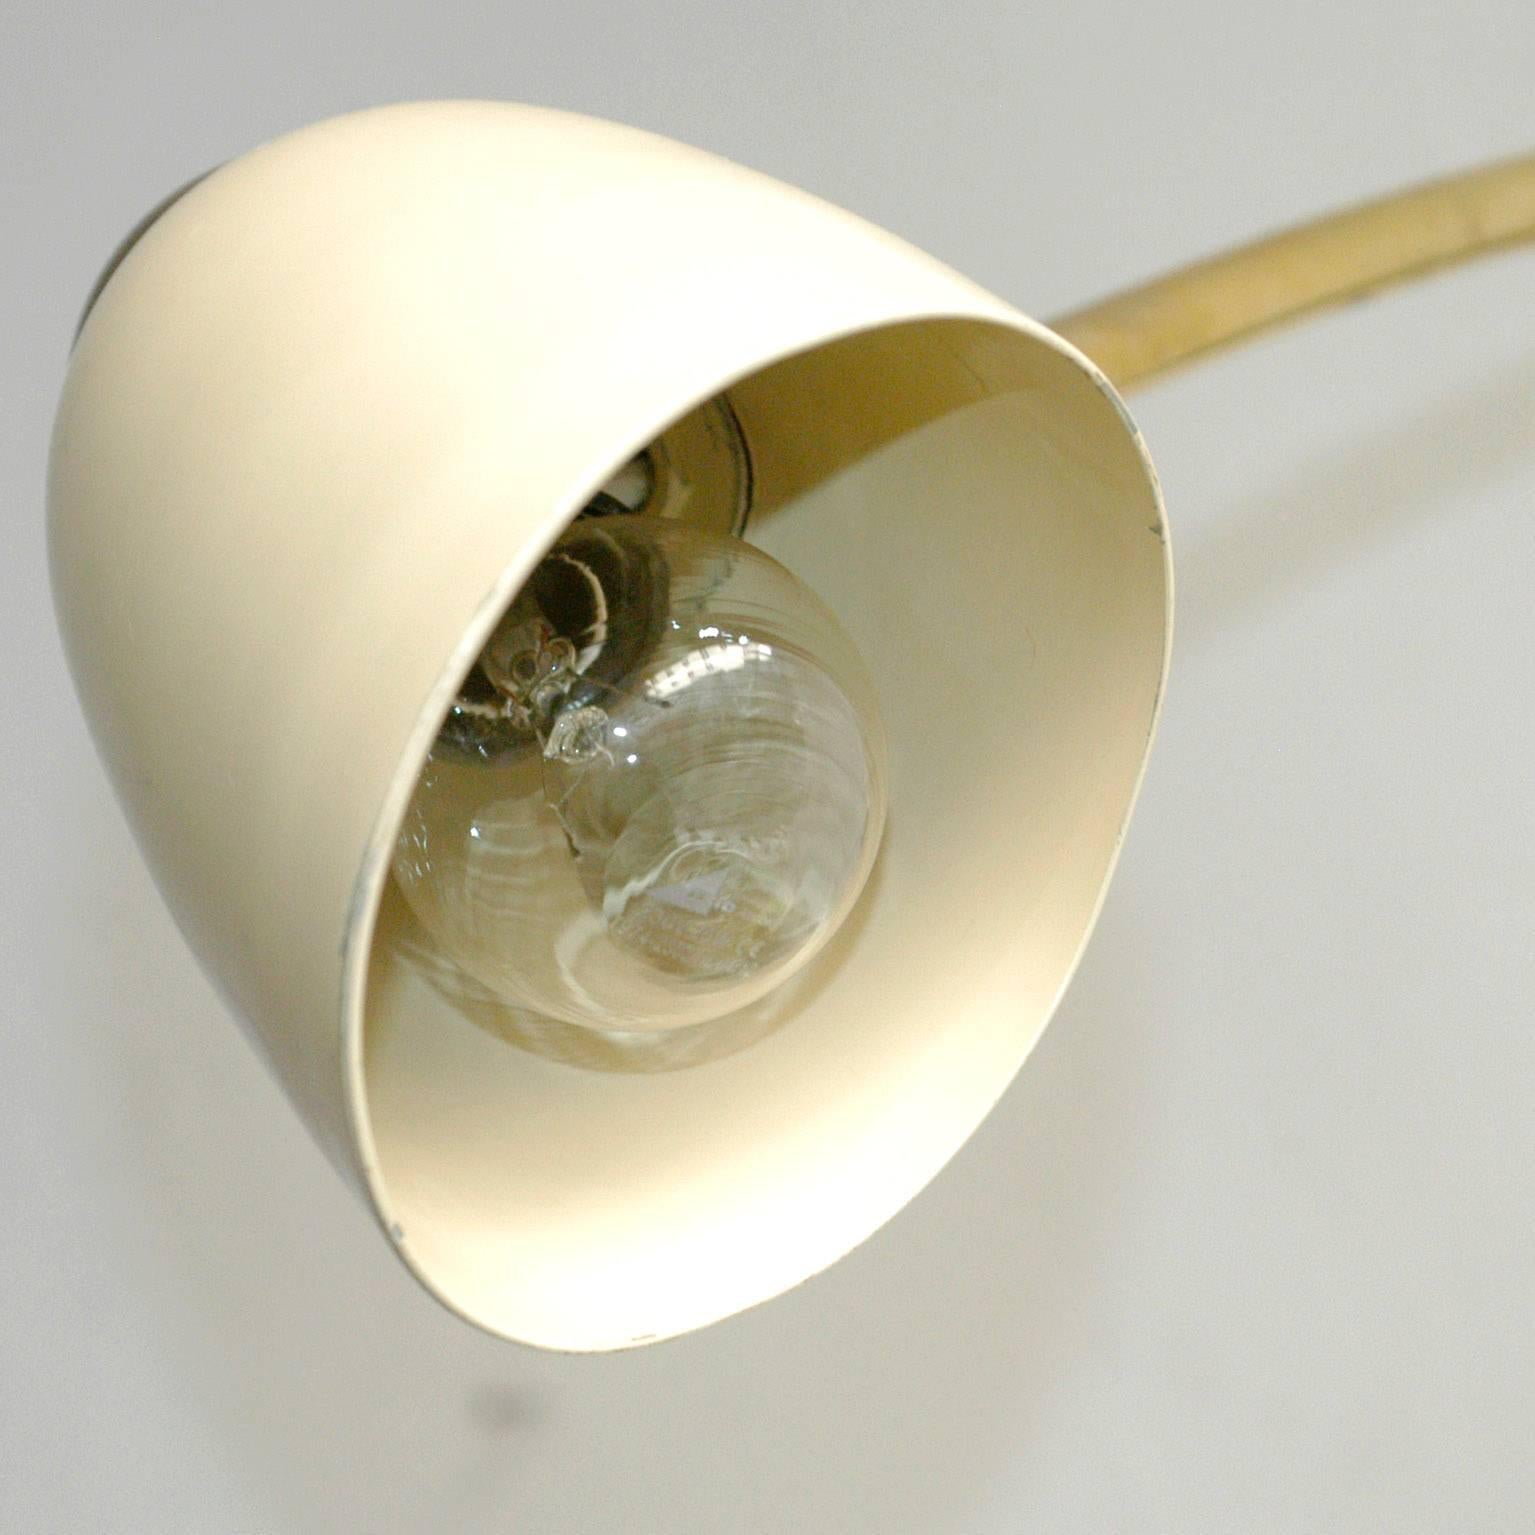 Italian Midcentury Brass Wall Light by Arteluce 1